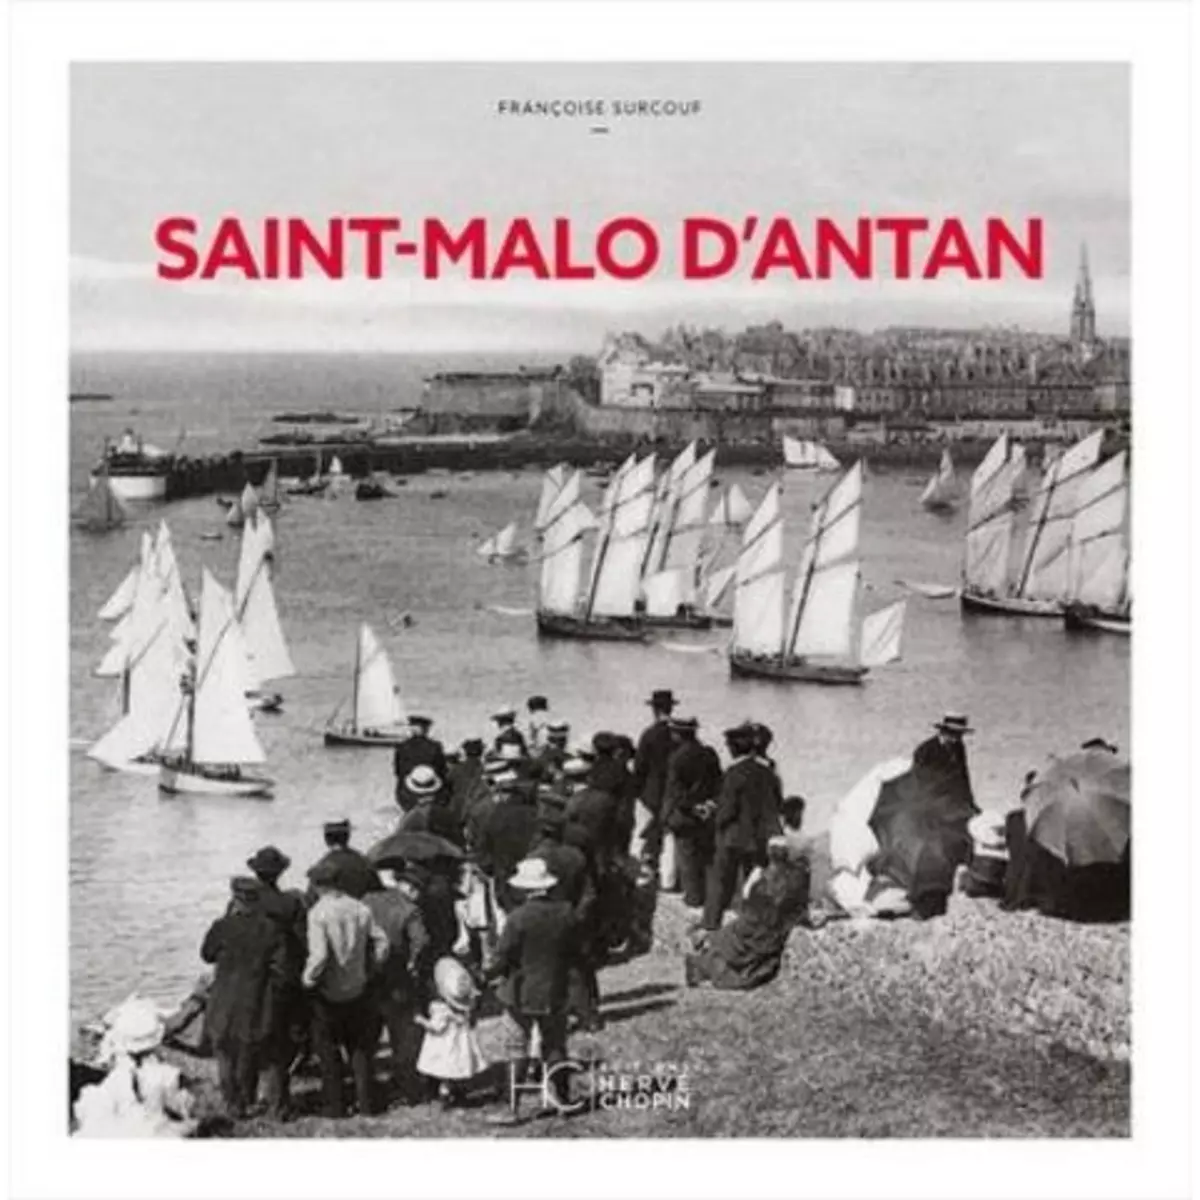  SAINT-MALO D'ANTAN, Surcouf Françoise